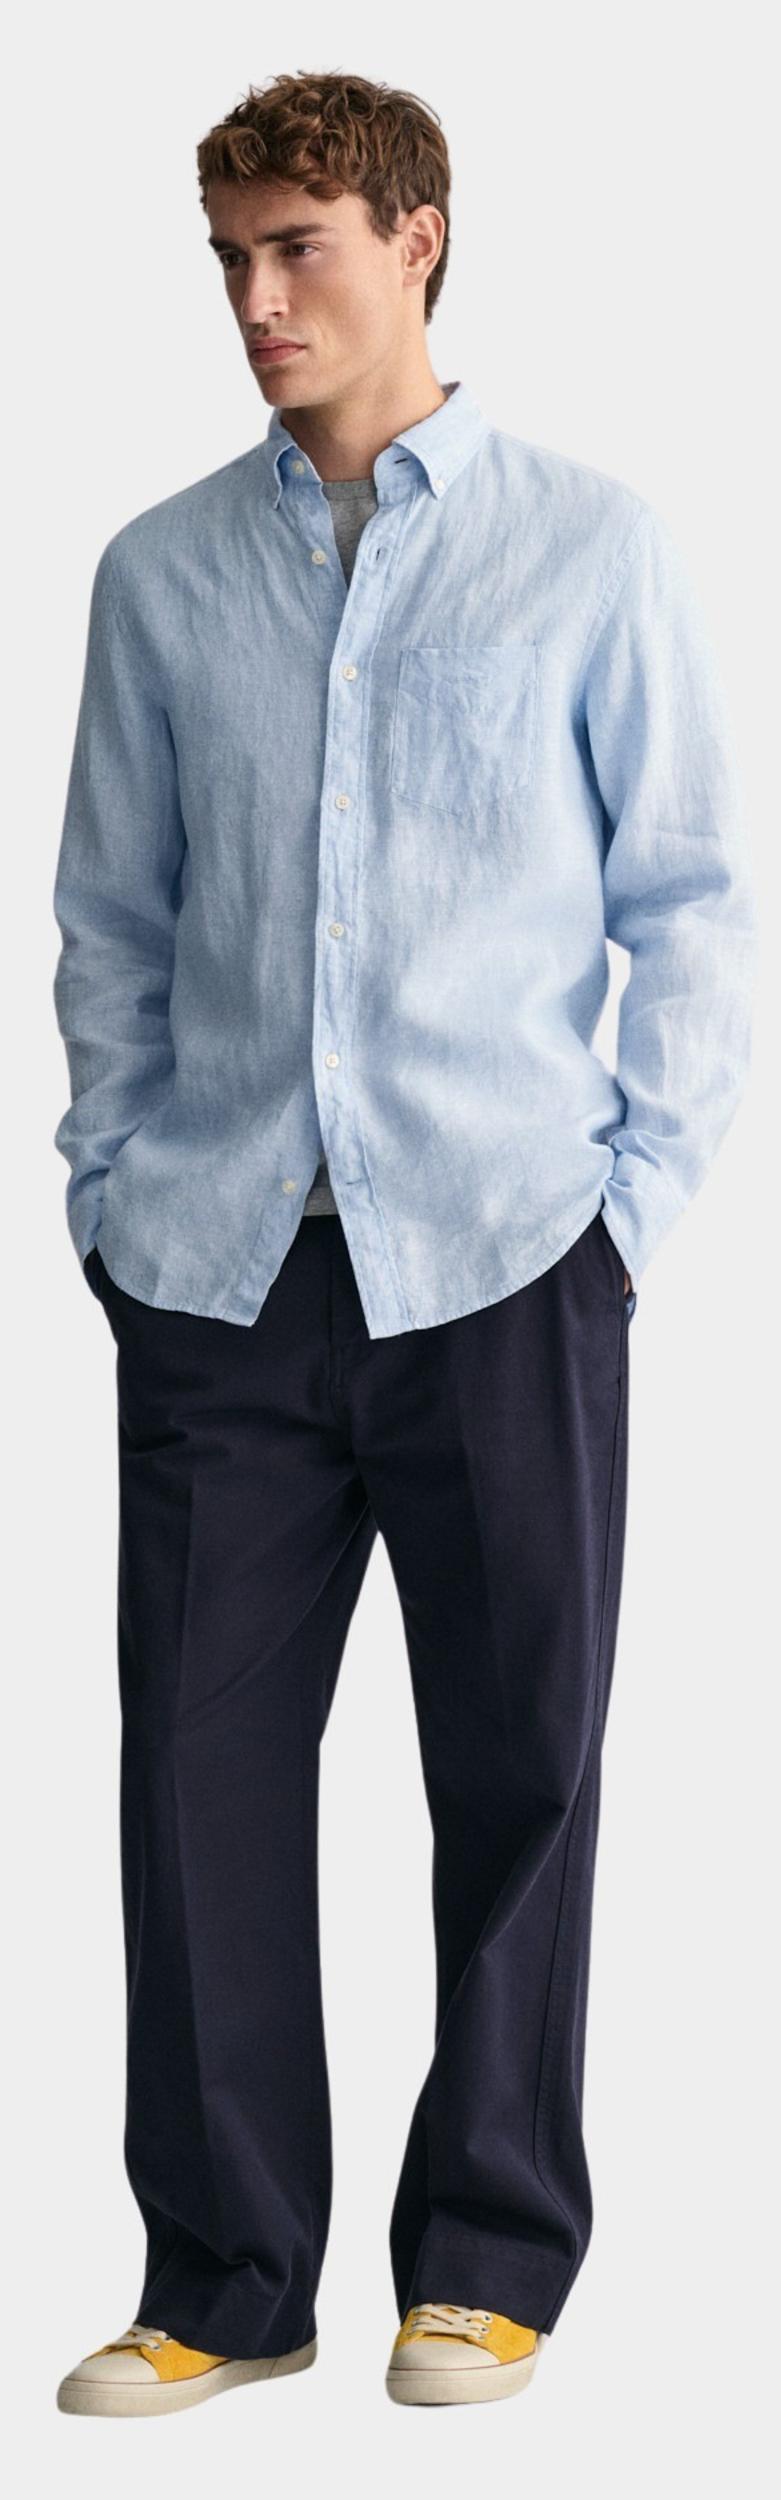 Gant Casual hemd lange mouw Blauw Linen Shirt 3240102/468